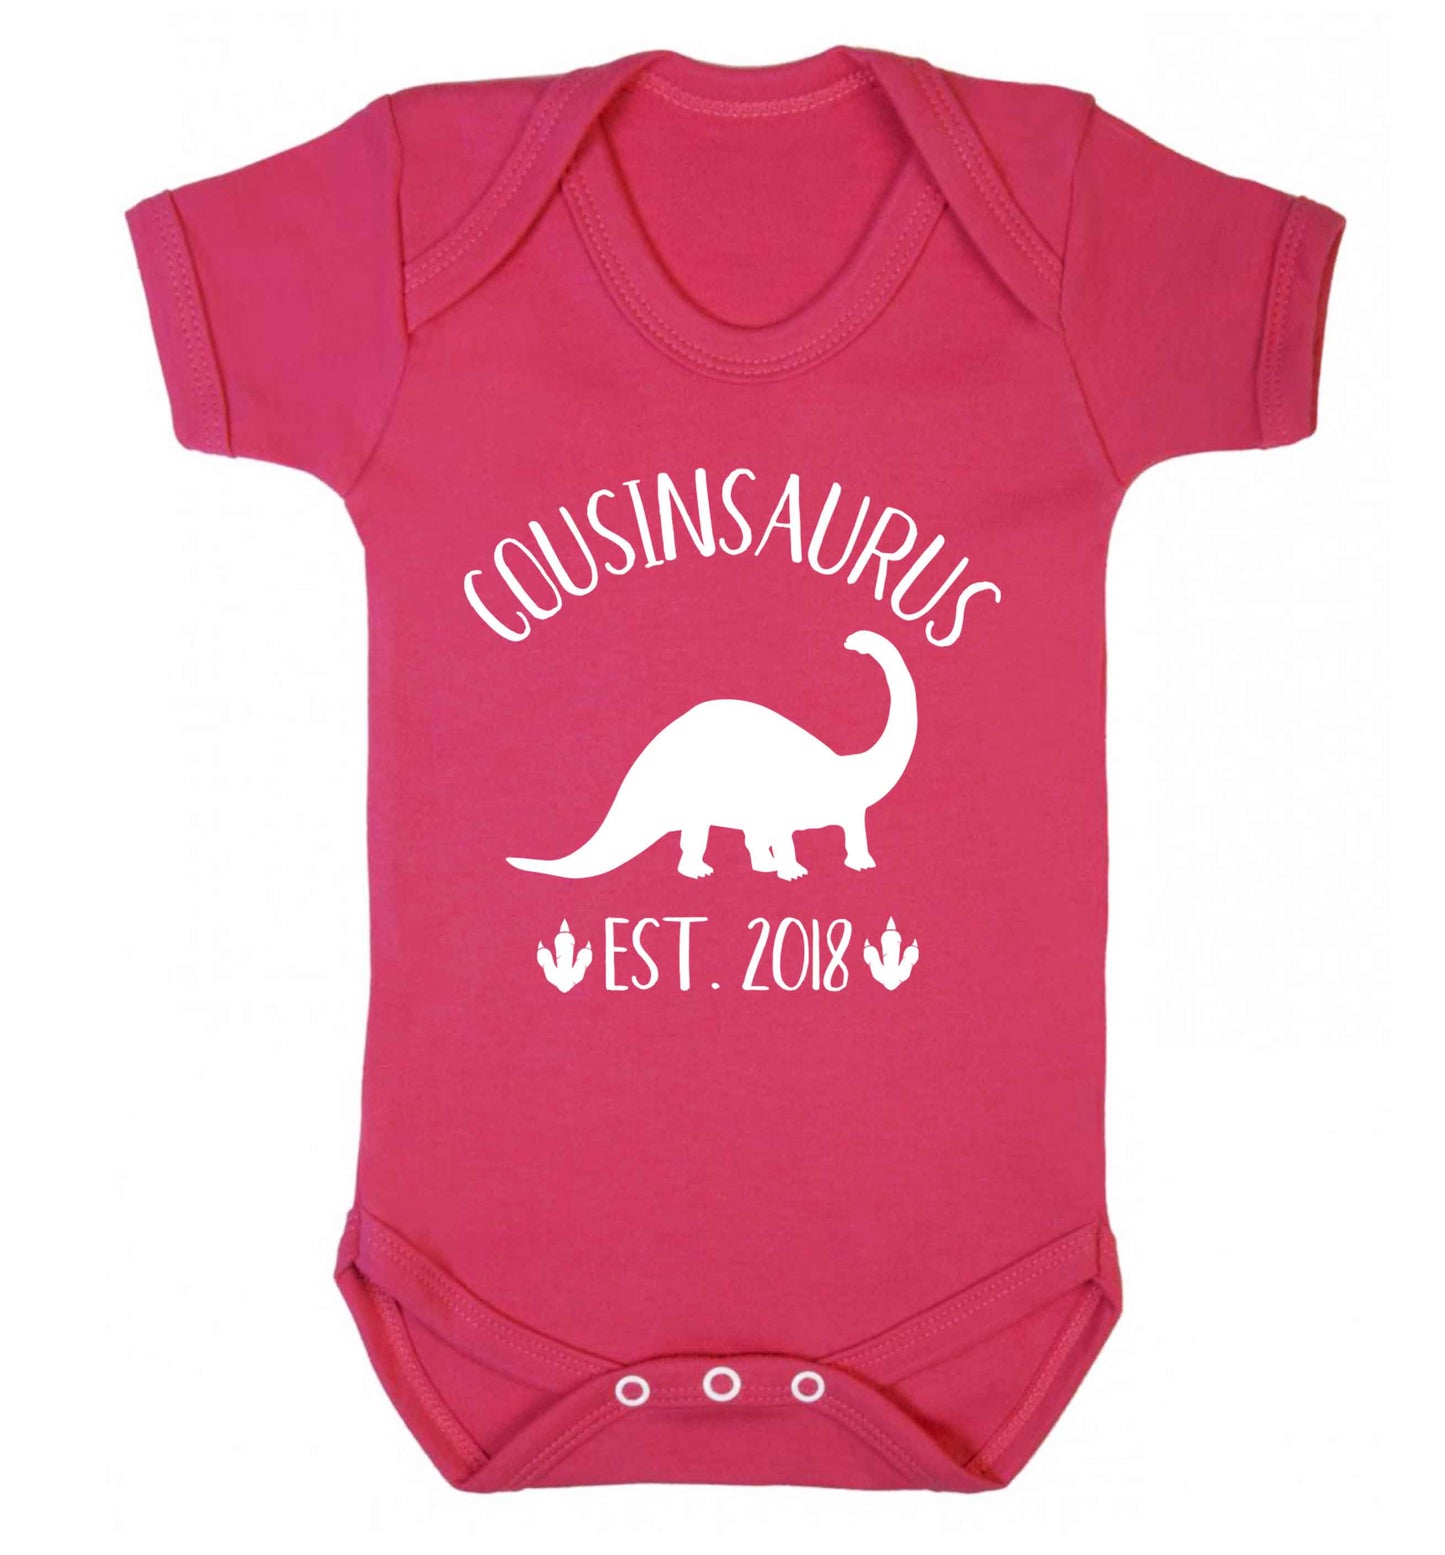 Personalised cousinsaurus since (custom date) Baby Vest dark pink 18-24 months